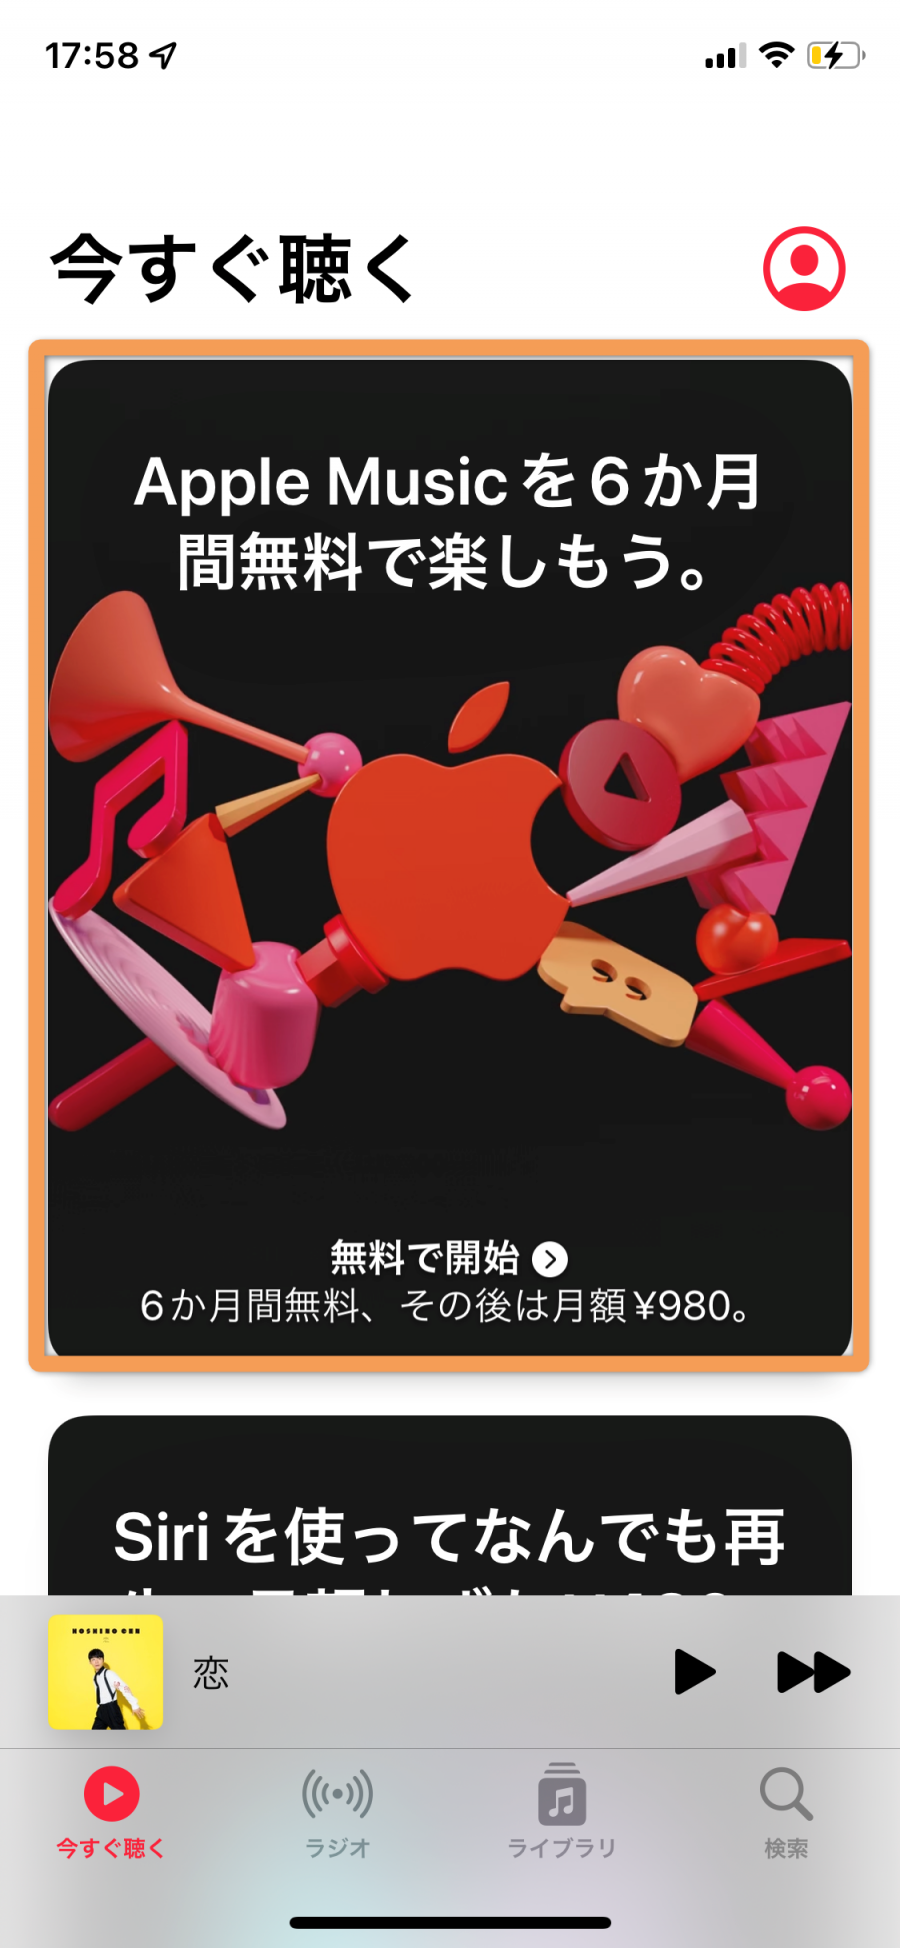 Apple Music 1ヶ月無料